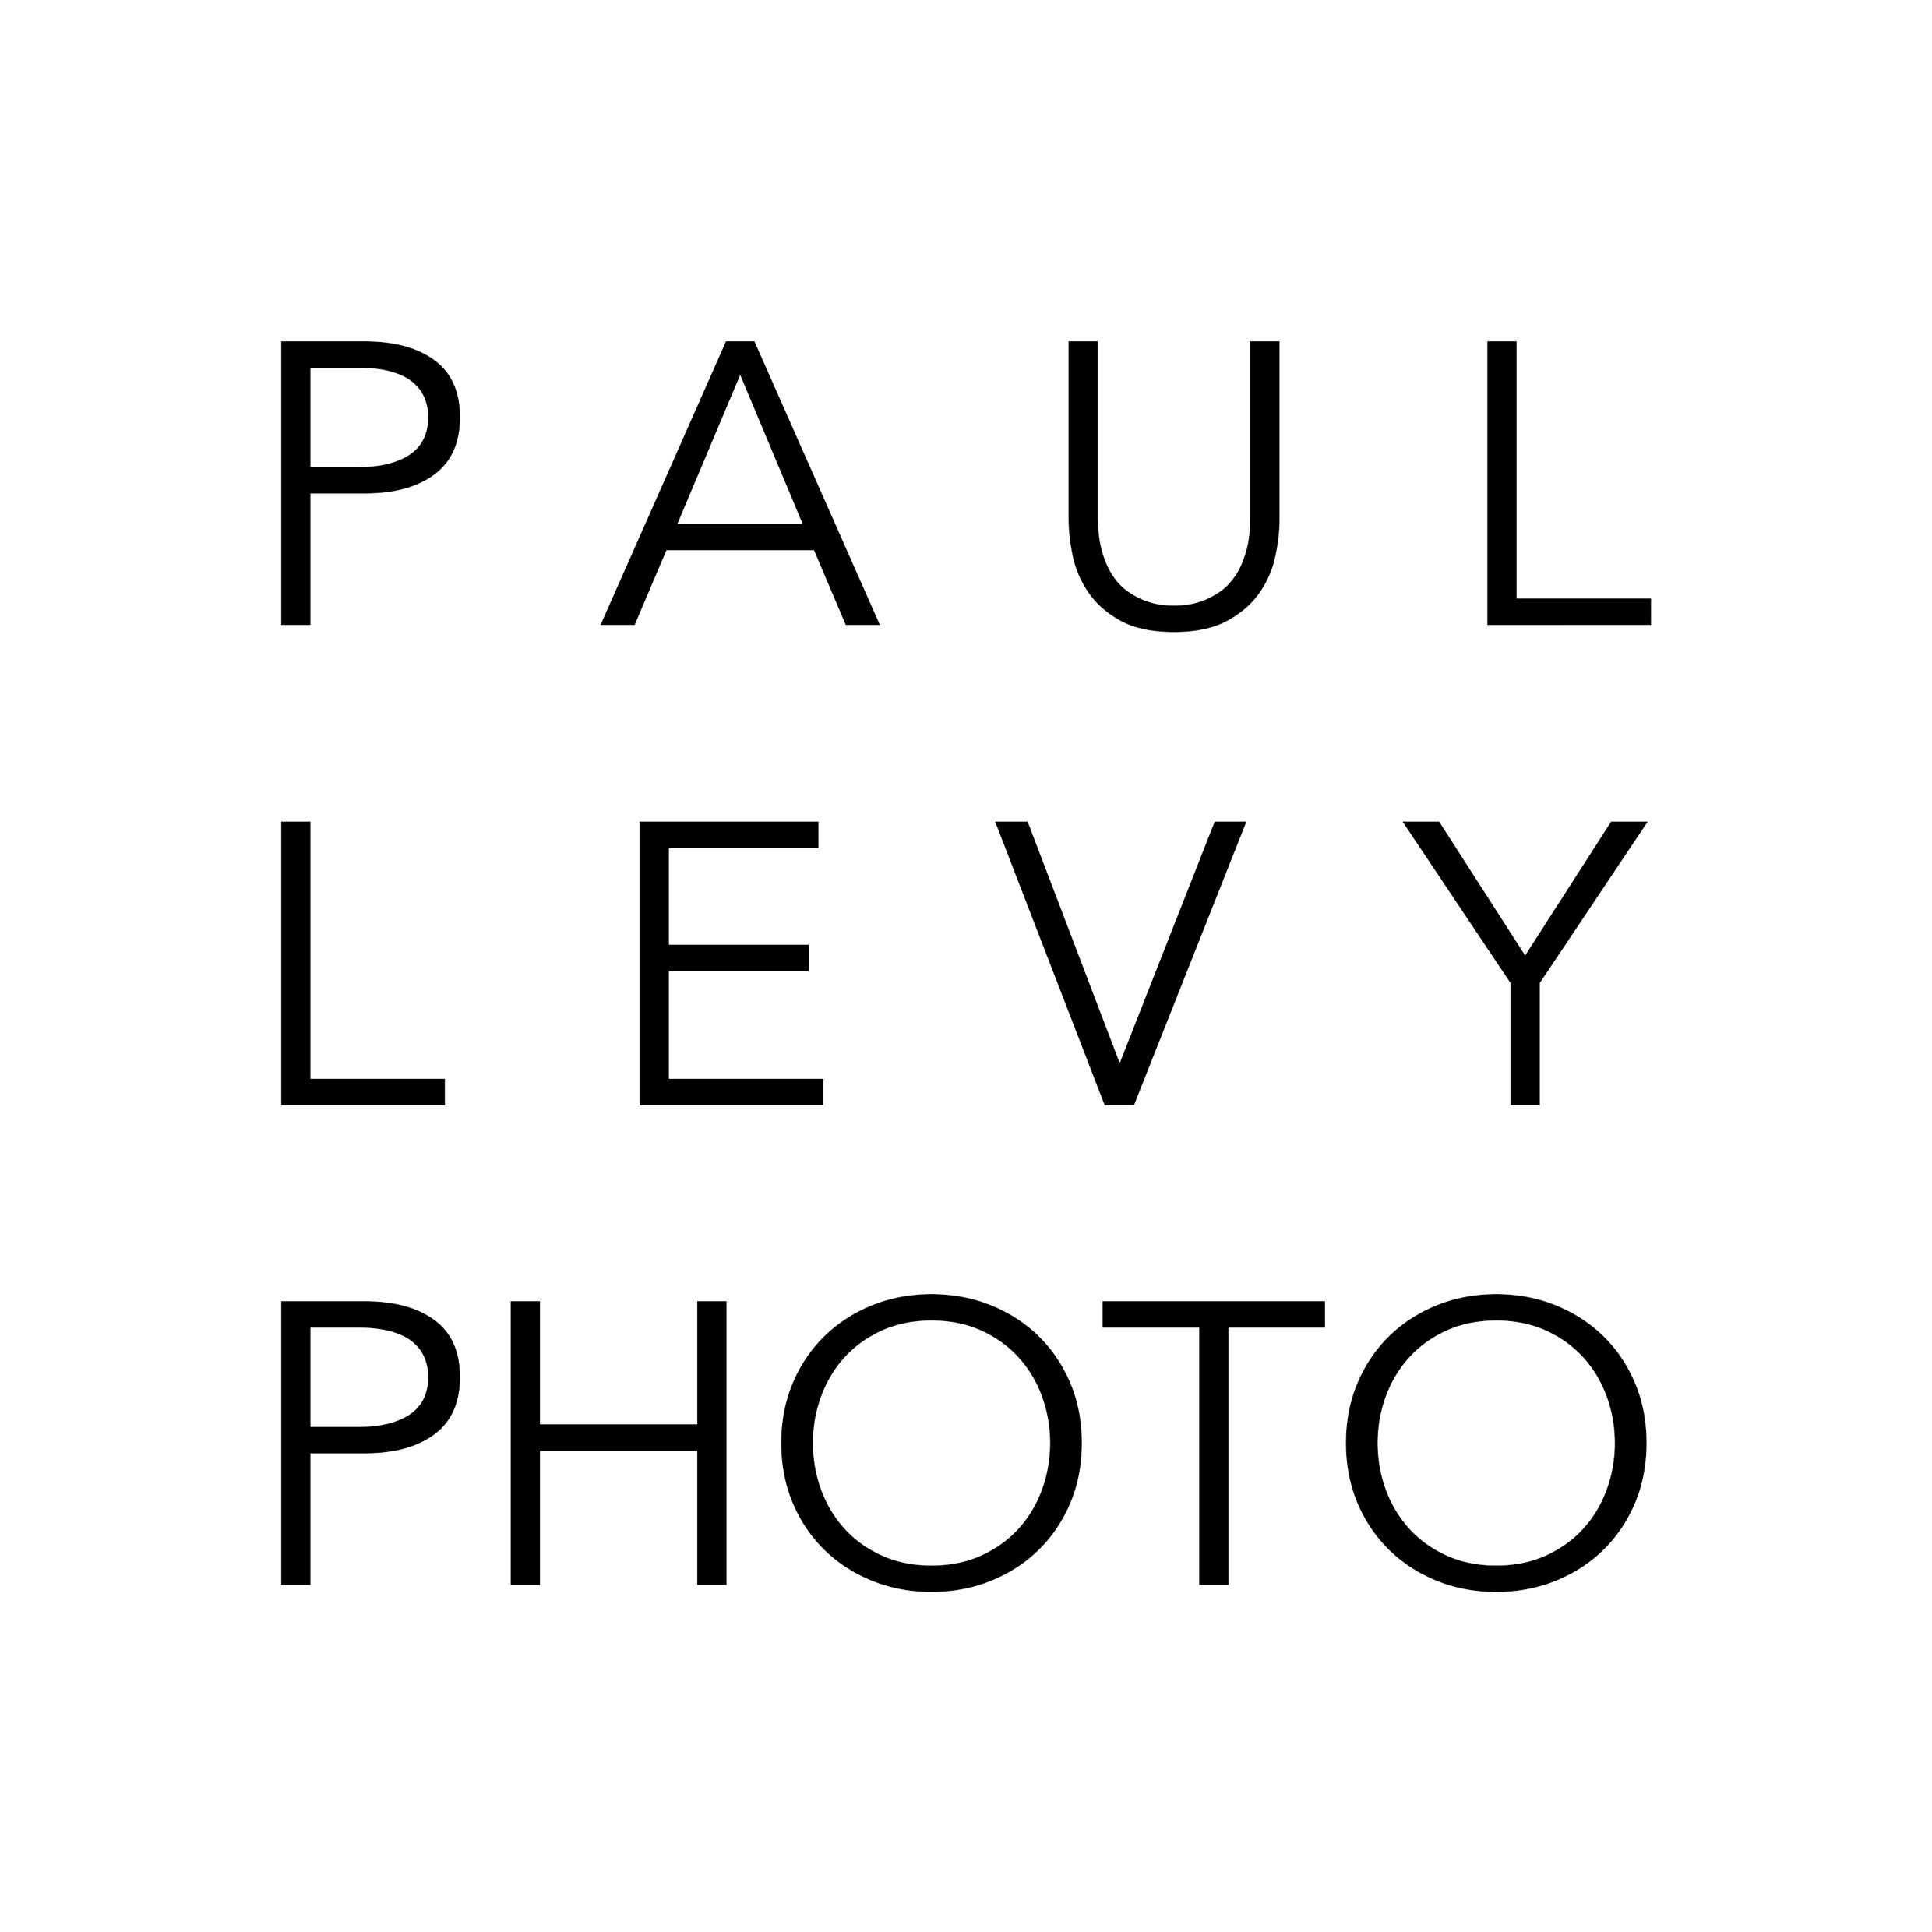 Paul Levy Photo